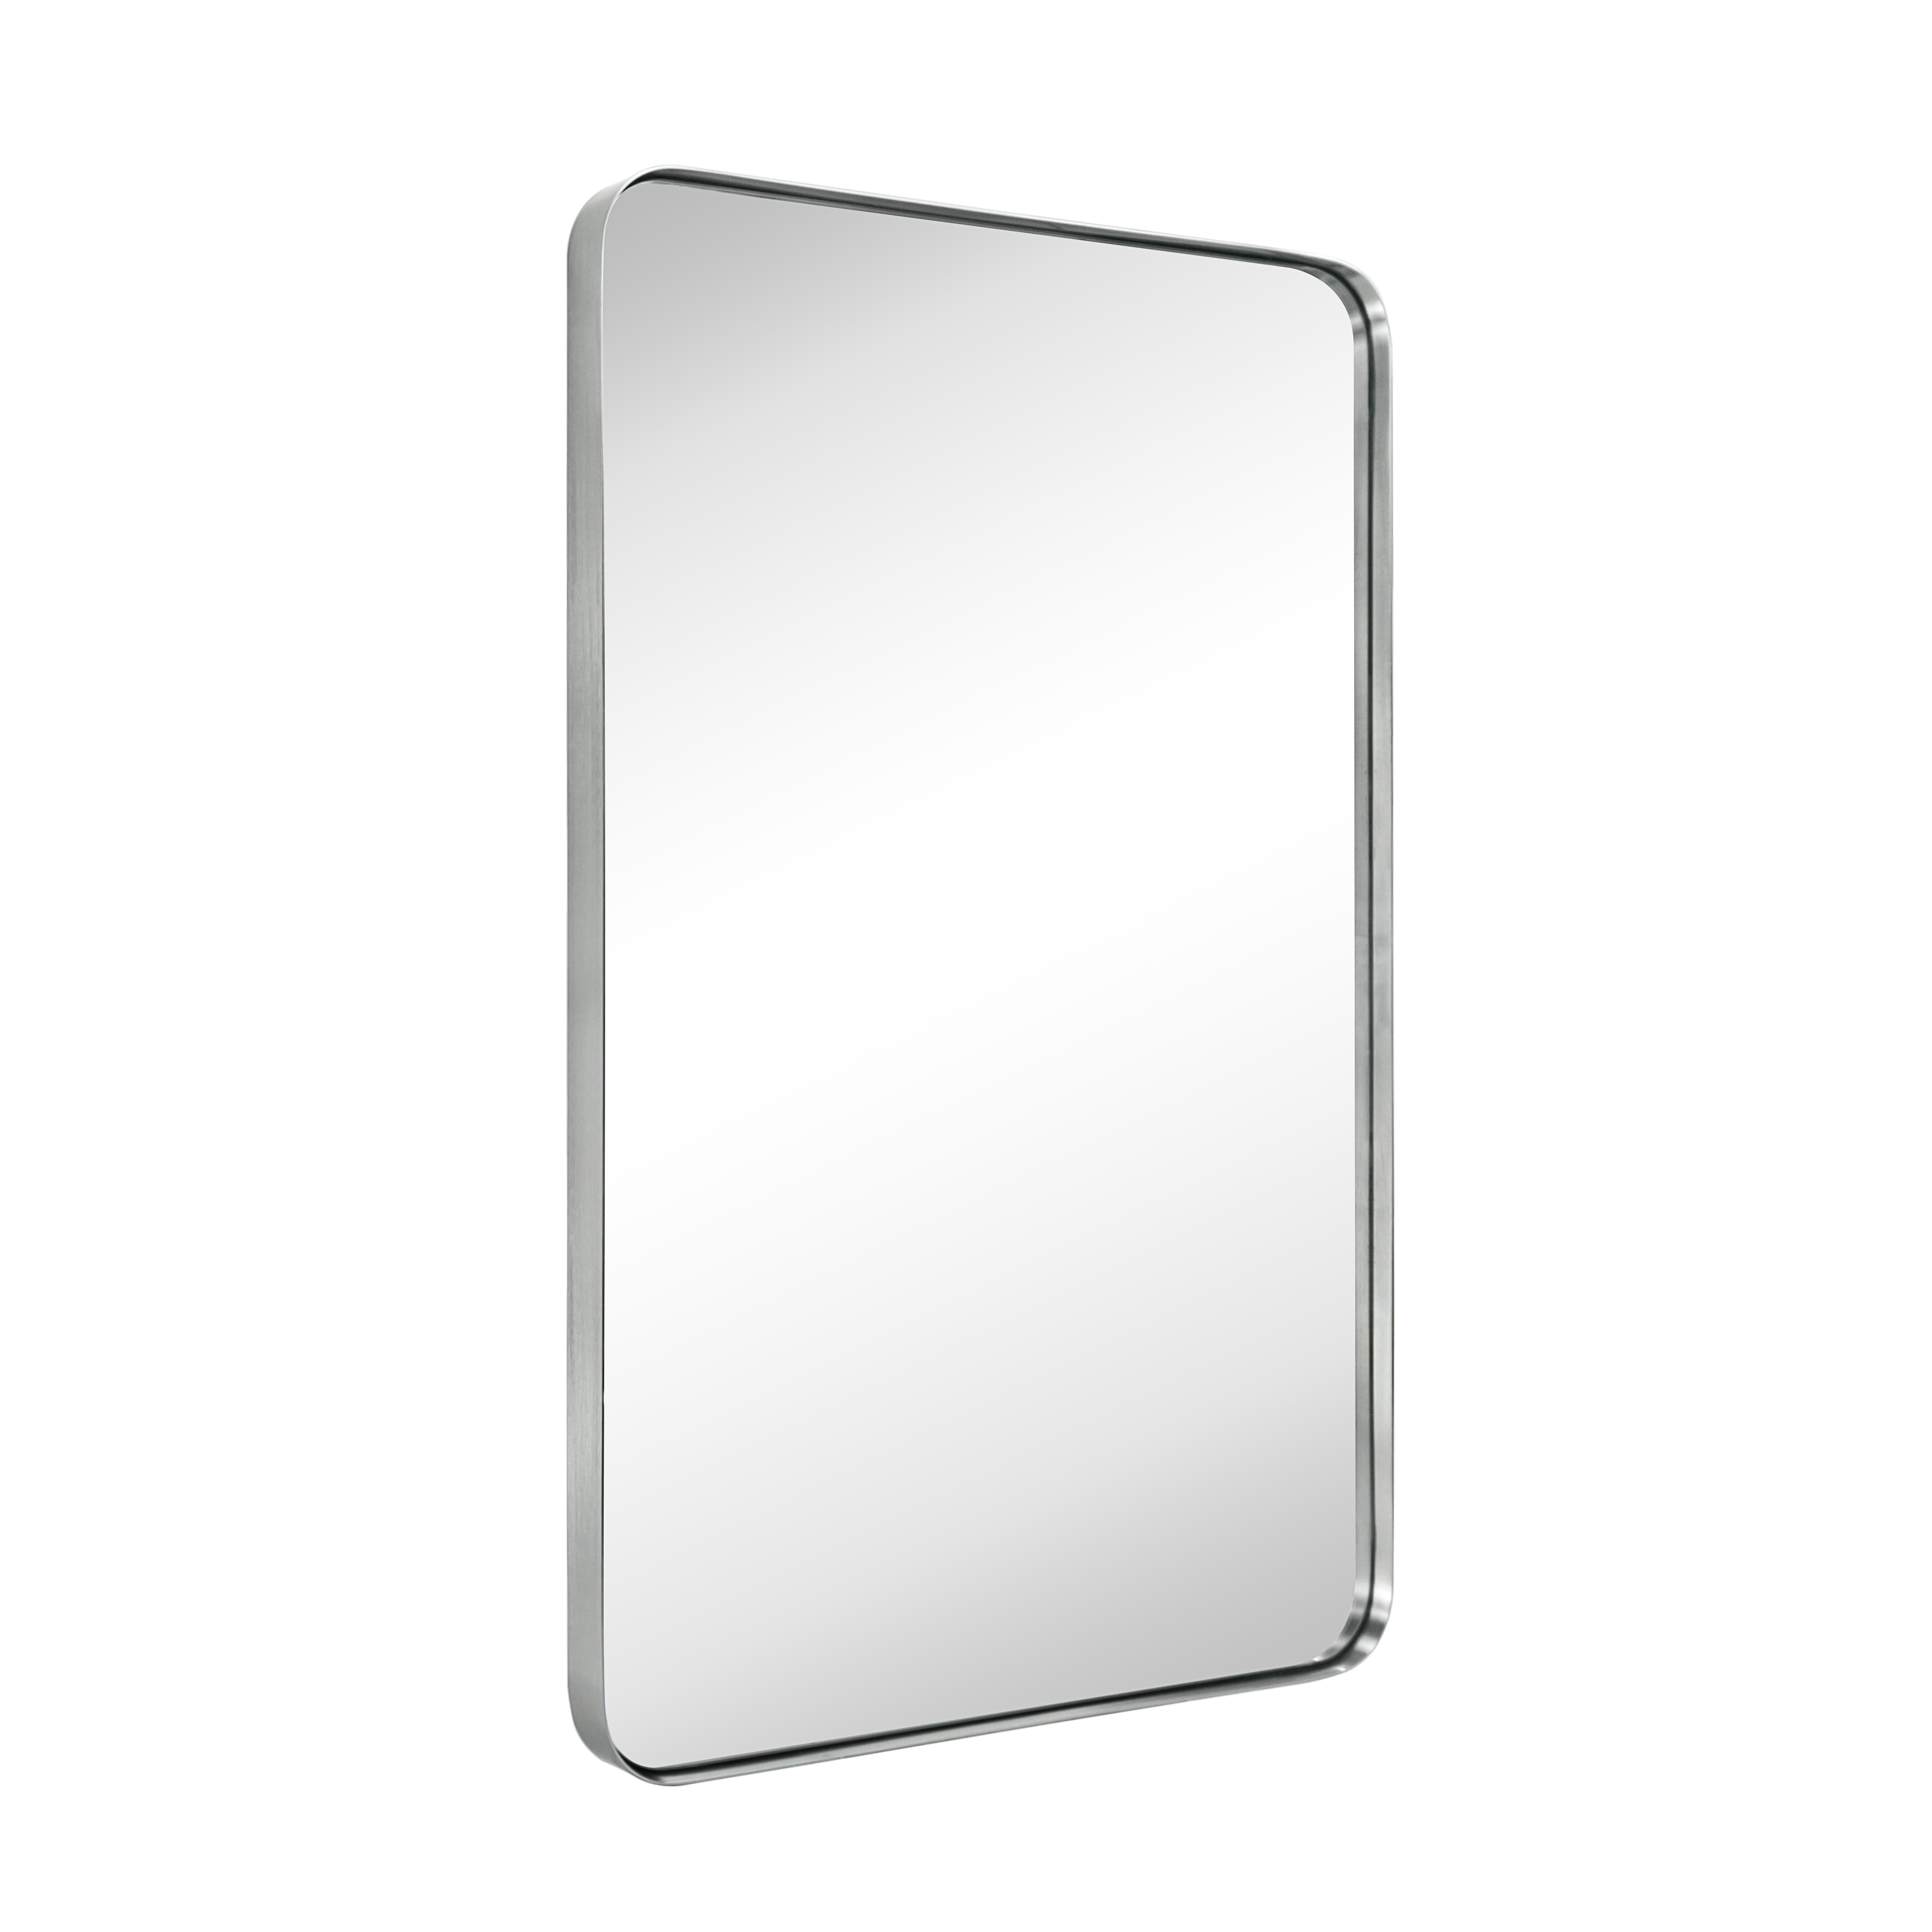 Kengston Modern & Contemporary Rectangular Bathroom Vanity Mirrors-24x36-Brushed Nickel